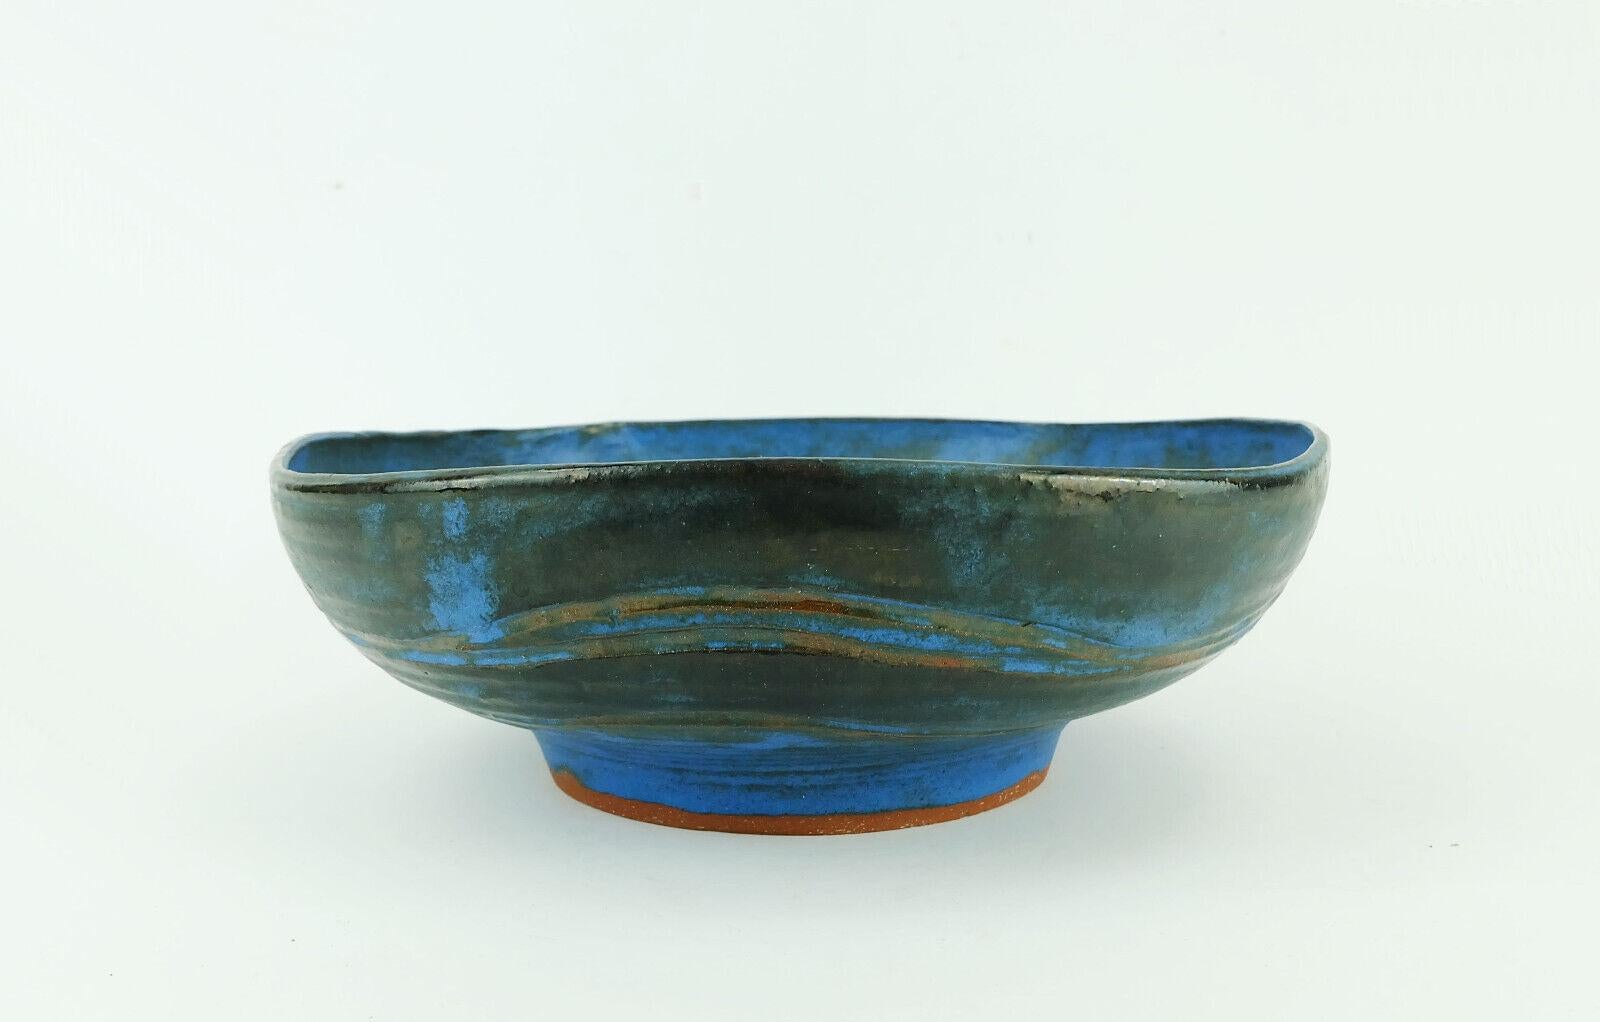 Danish Modern Ceramic Bowl Studio Pottery Conny Walther Denmark 1960s For Sale 2